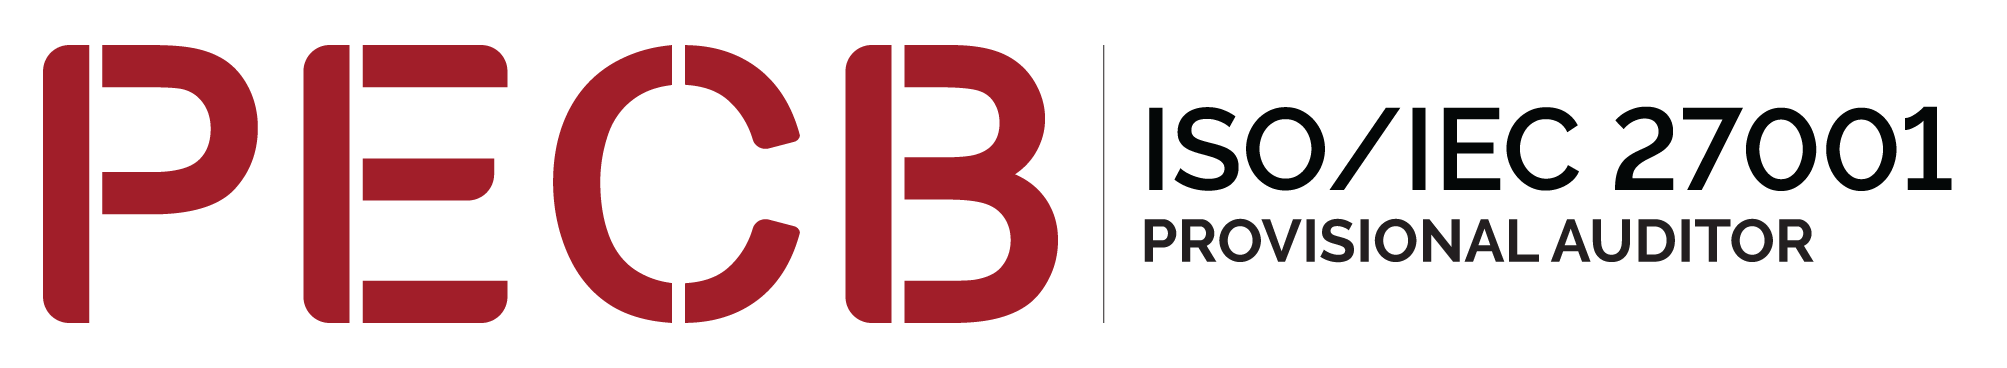 PECB Logo ISO 27001 Provisional Auditor